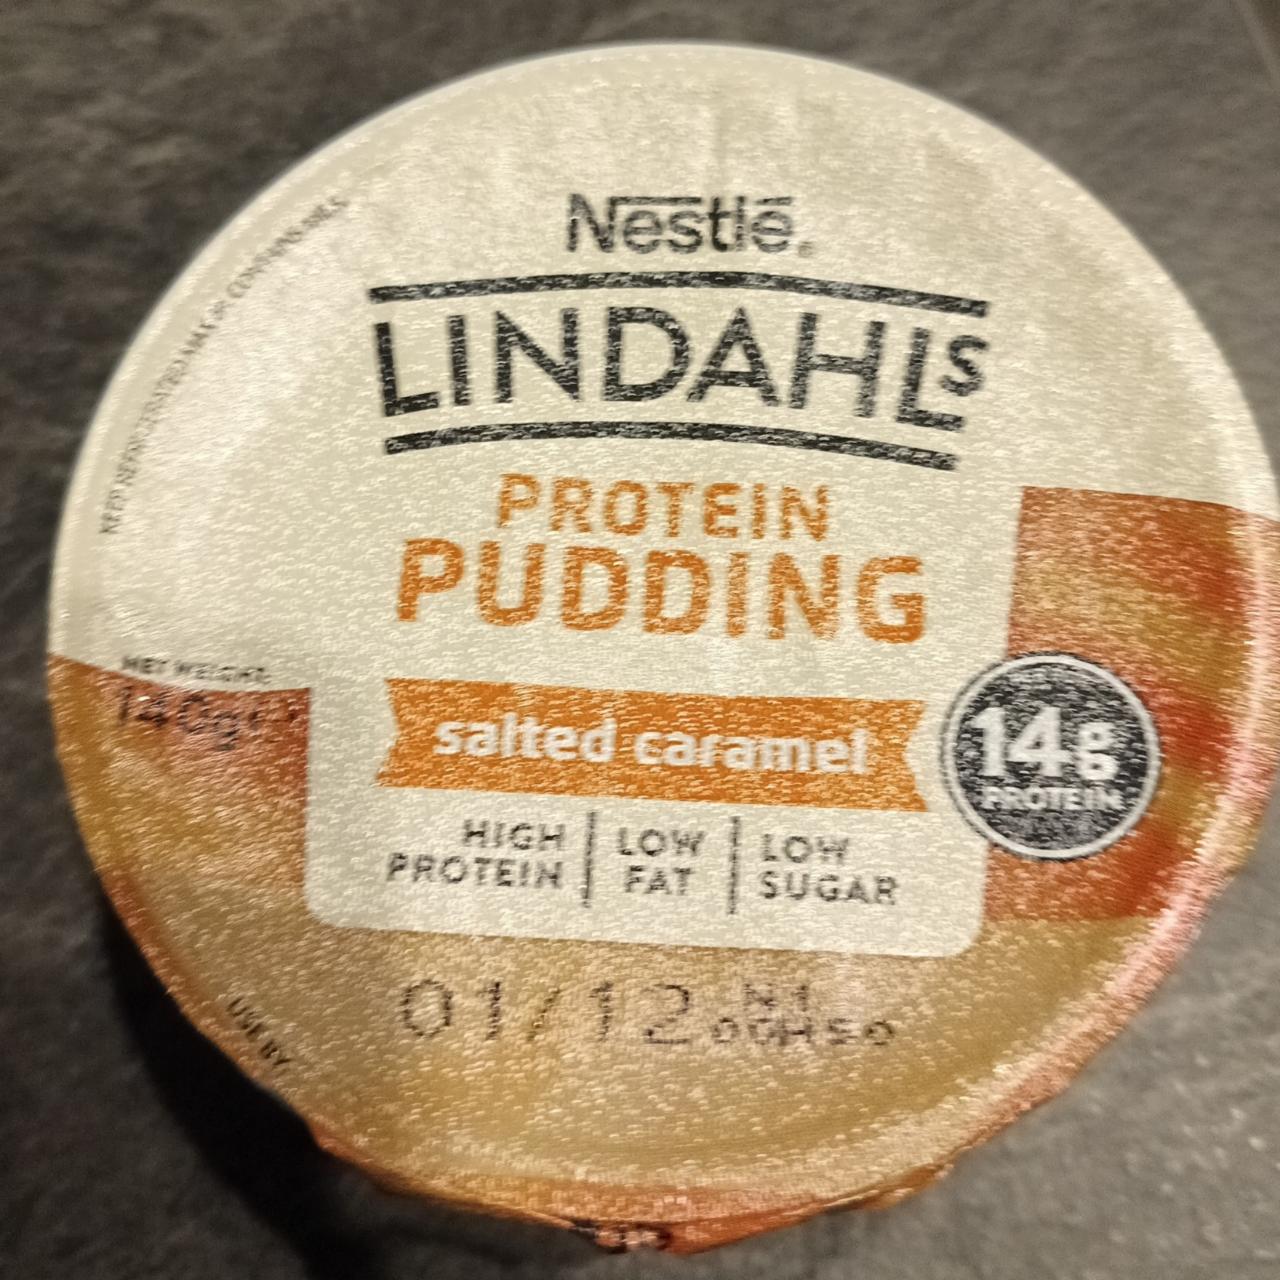 Fotografie - Lindahl's protein pudding salted caramel Nestlé